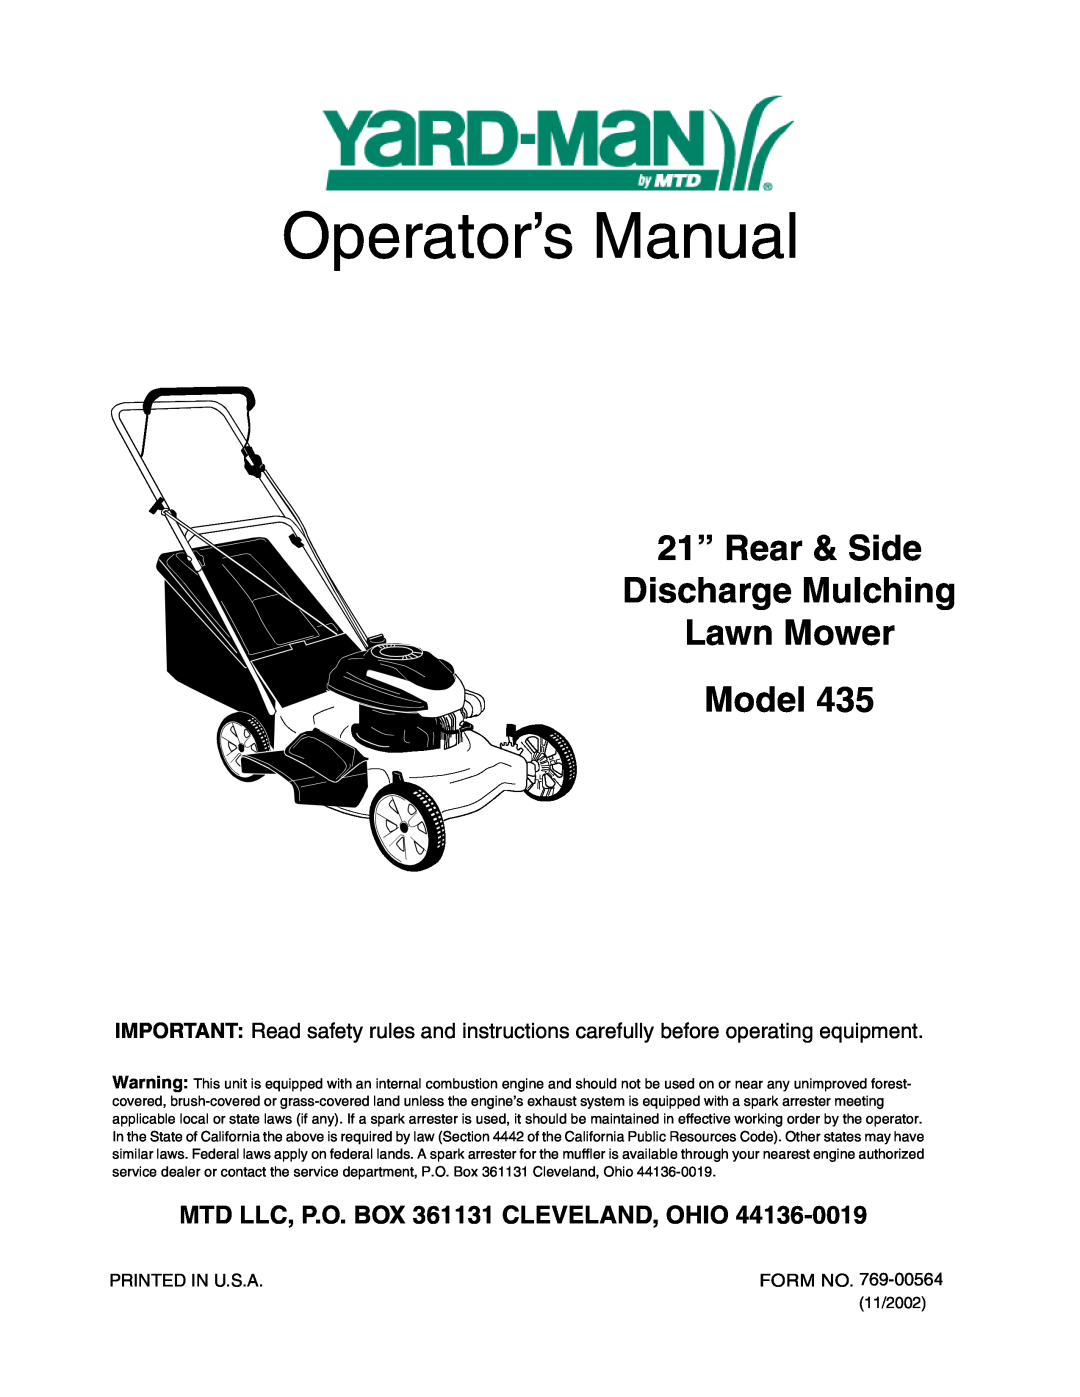 MTD 435 manual Operator’s Manual, 21” Rear & Side Discharge Mulching Lawn Mower, Model 